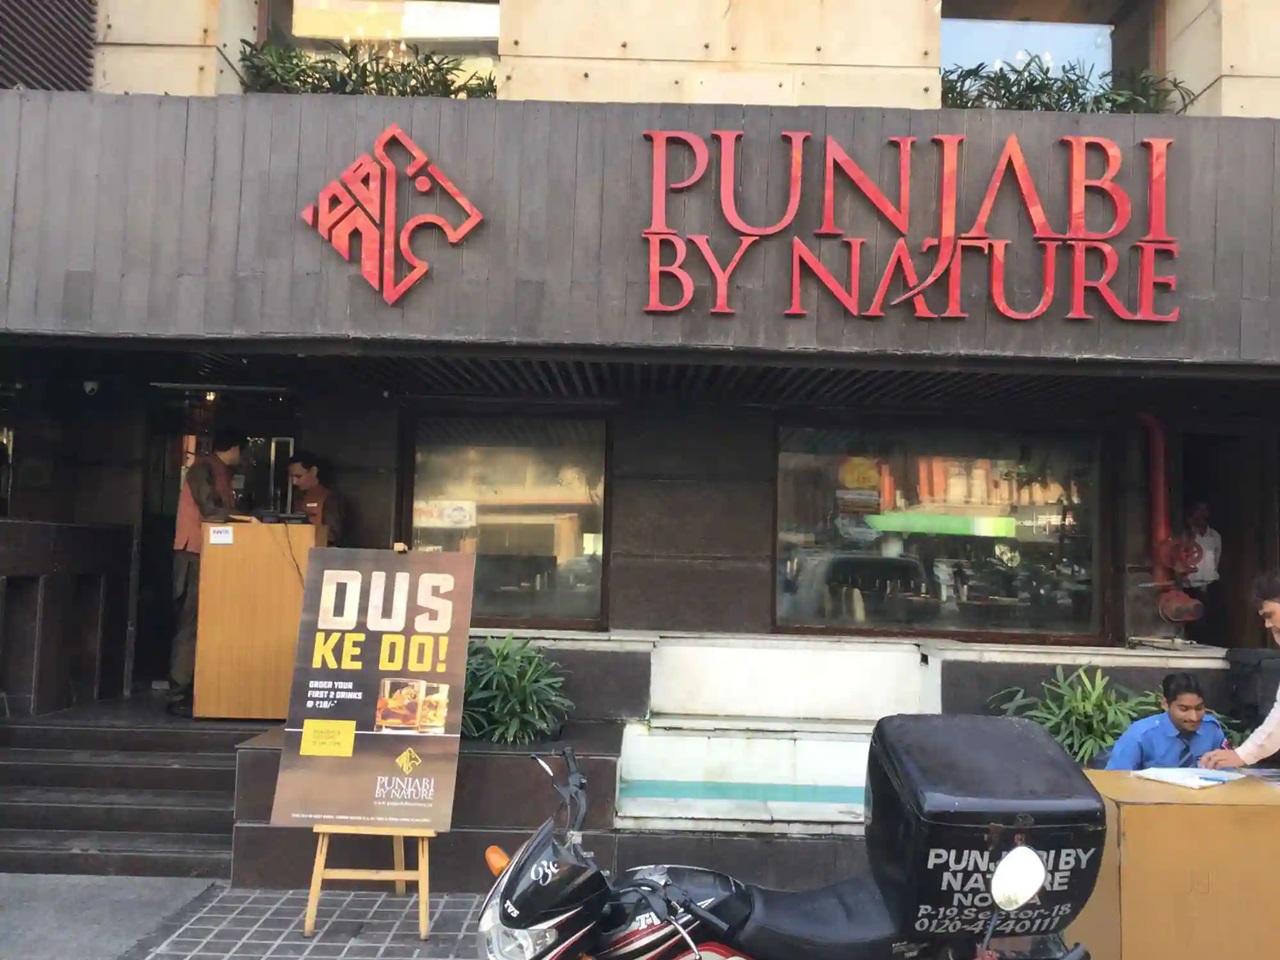 Punjabi by Nature restaurant in Delhi